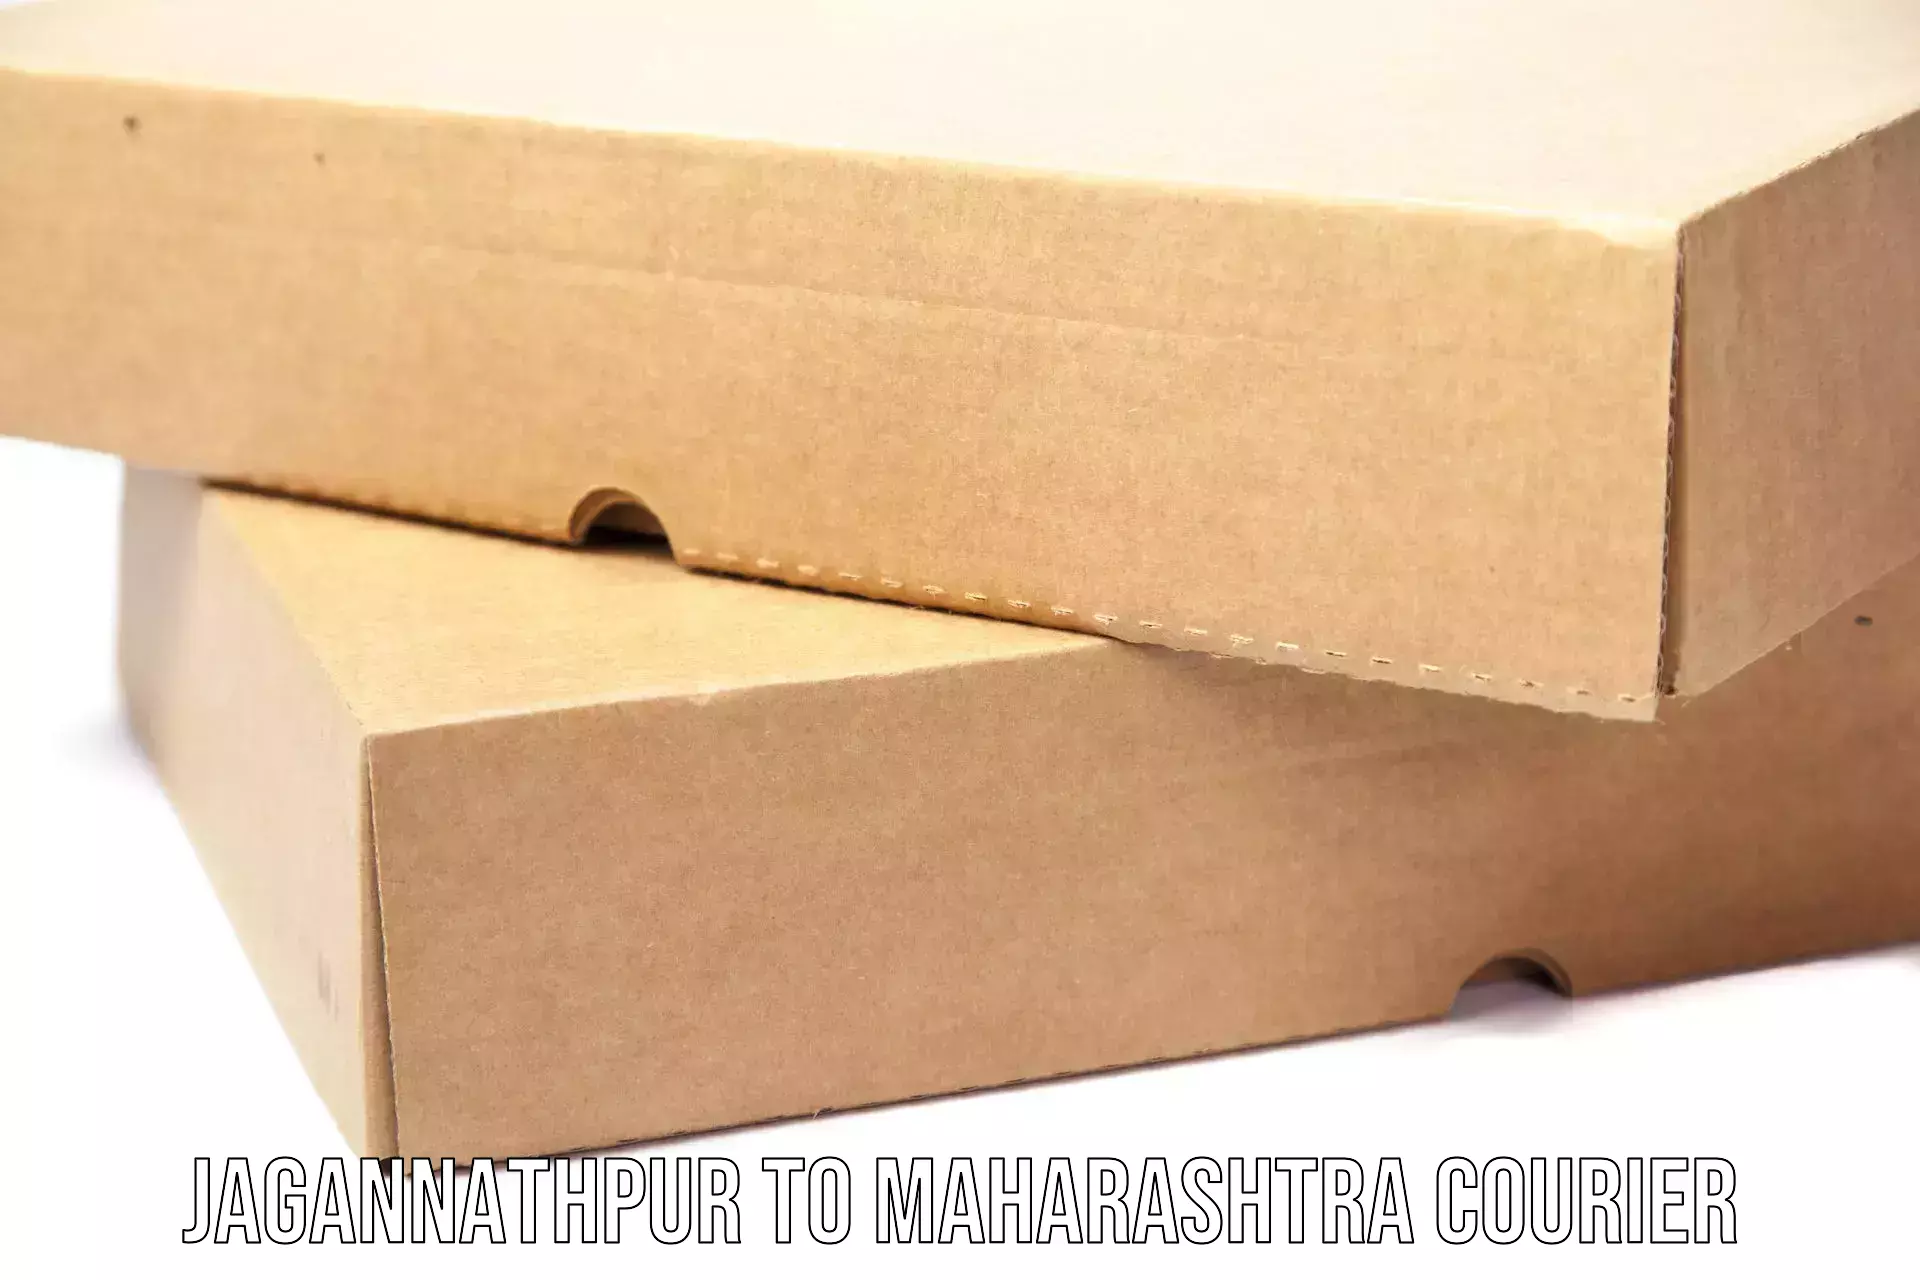 Courier service innovation Jagannathpur to Maharashtra